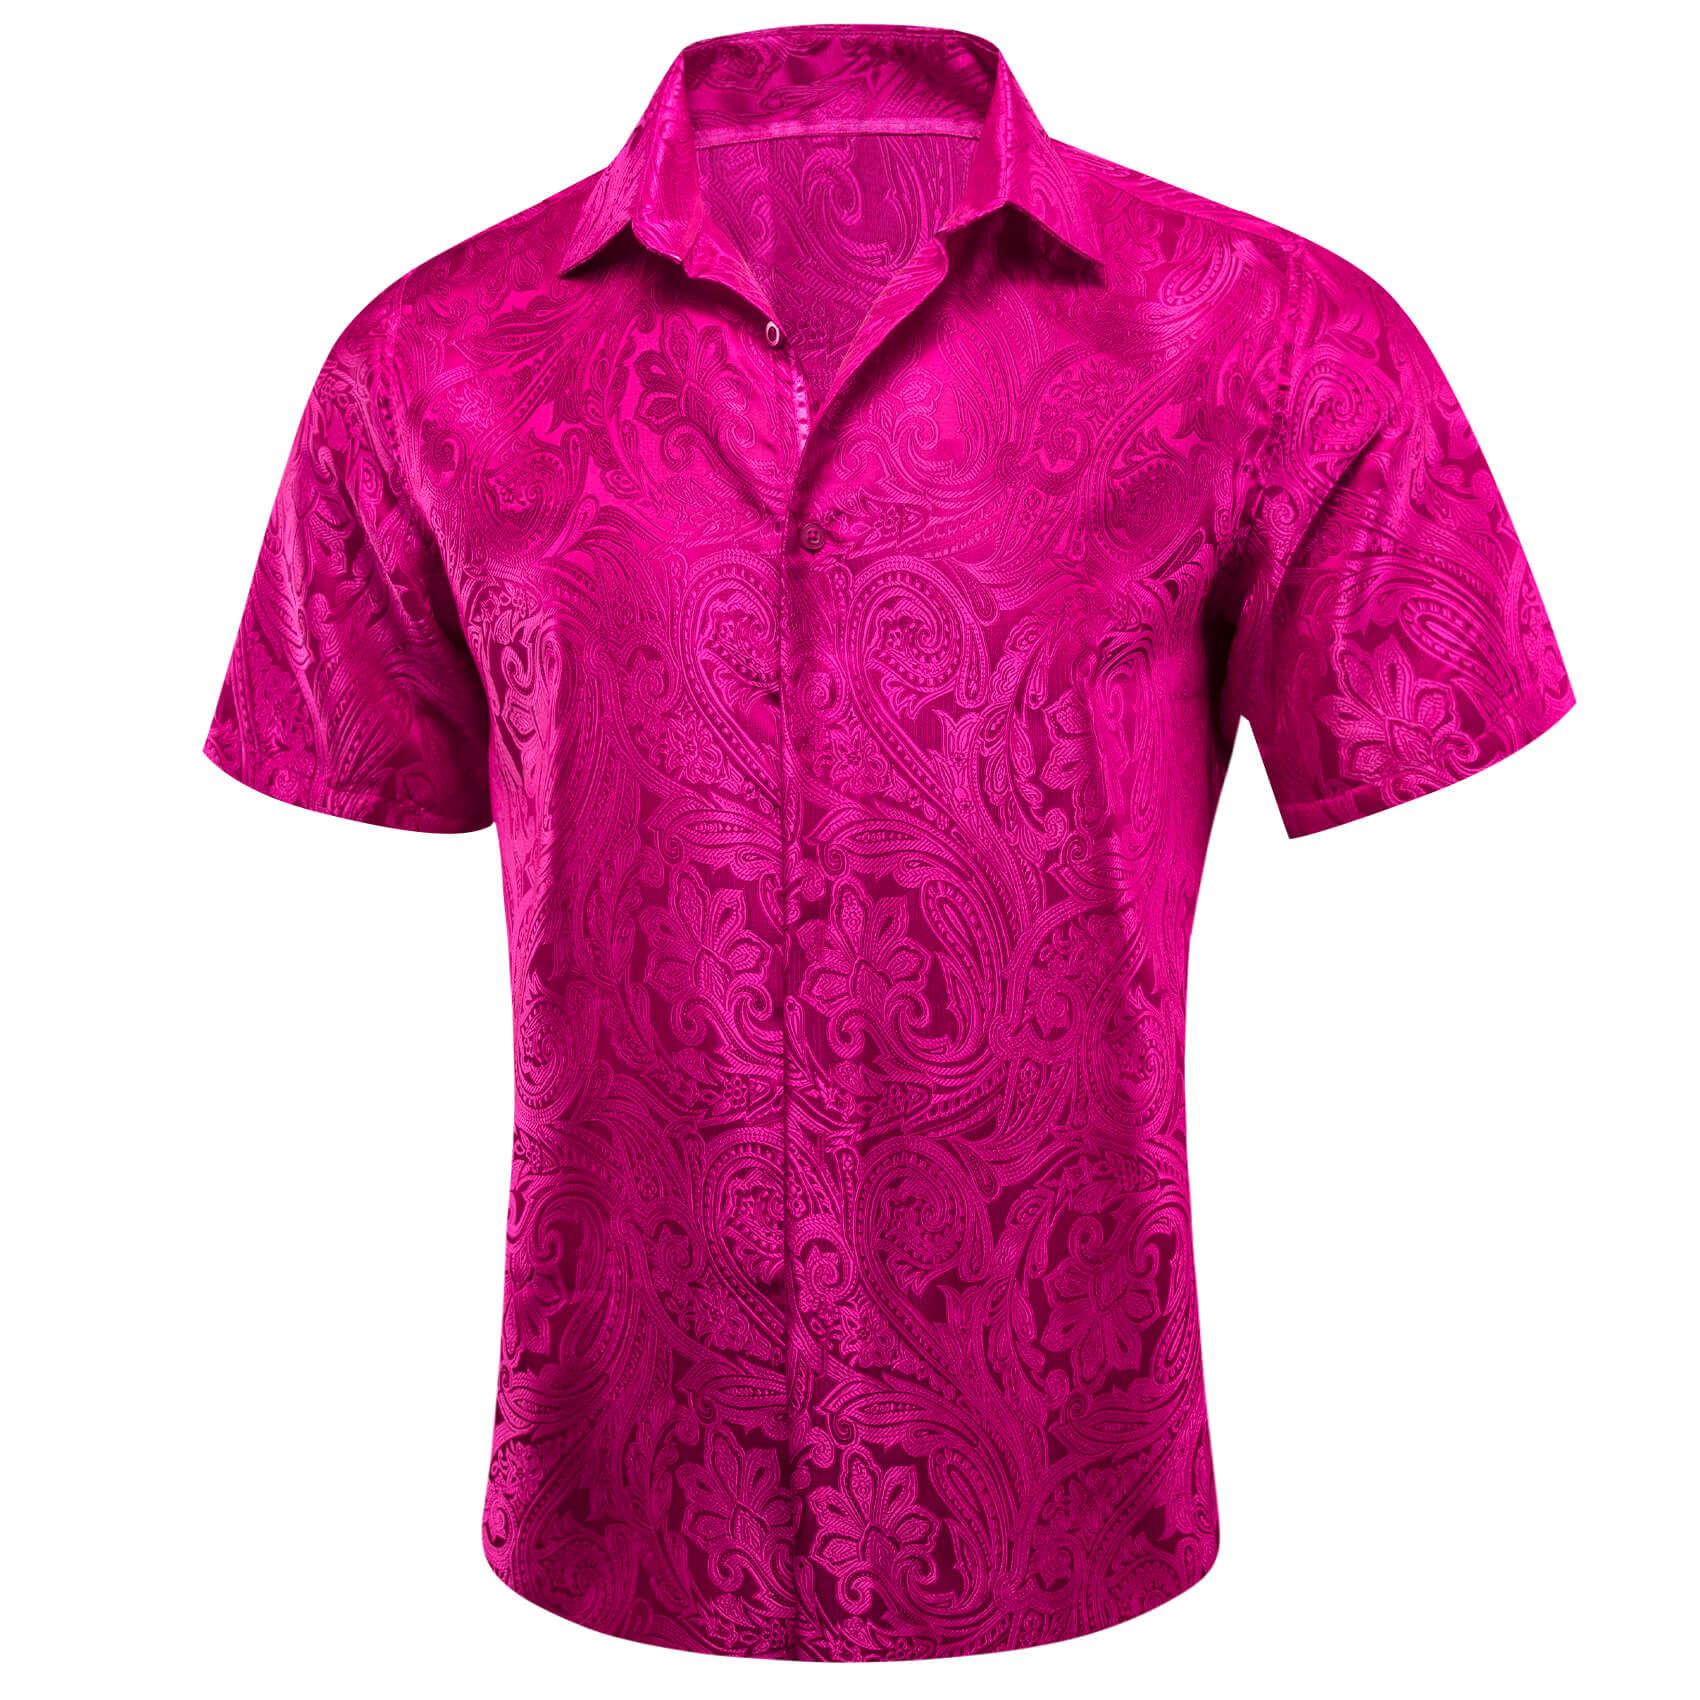 Barry Wang Short Sleeve Shirt Jacquard Paisley MediumVioletRed Shirt